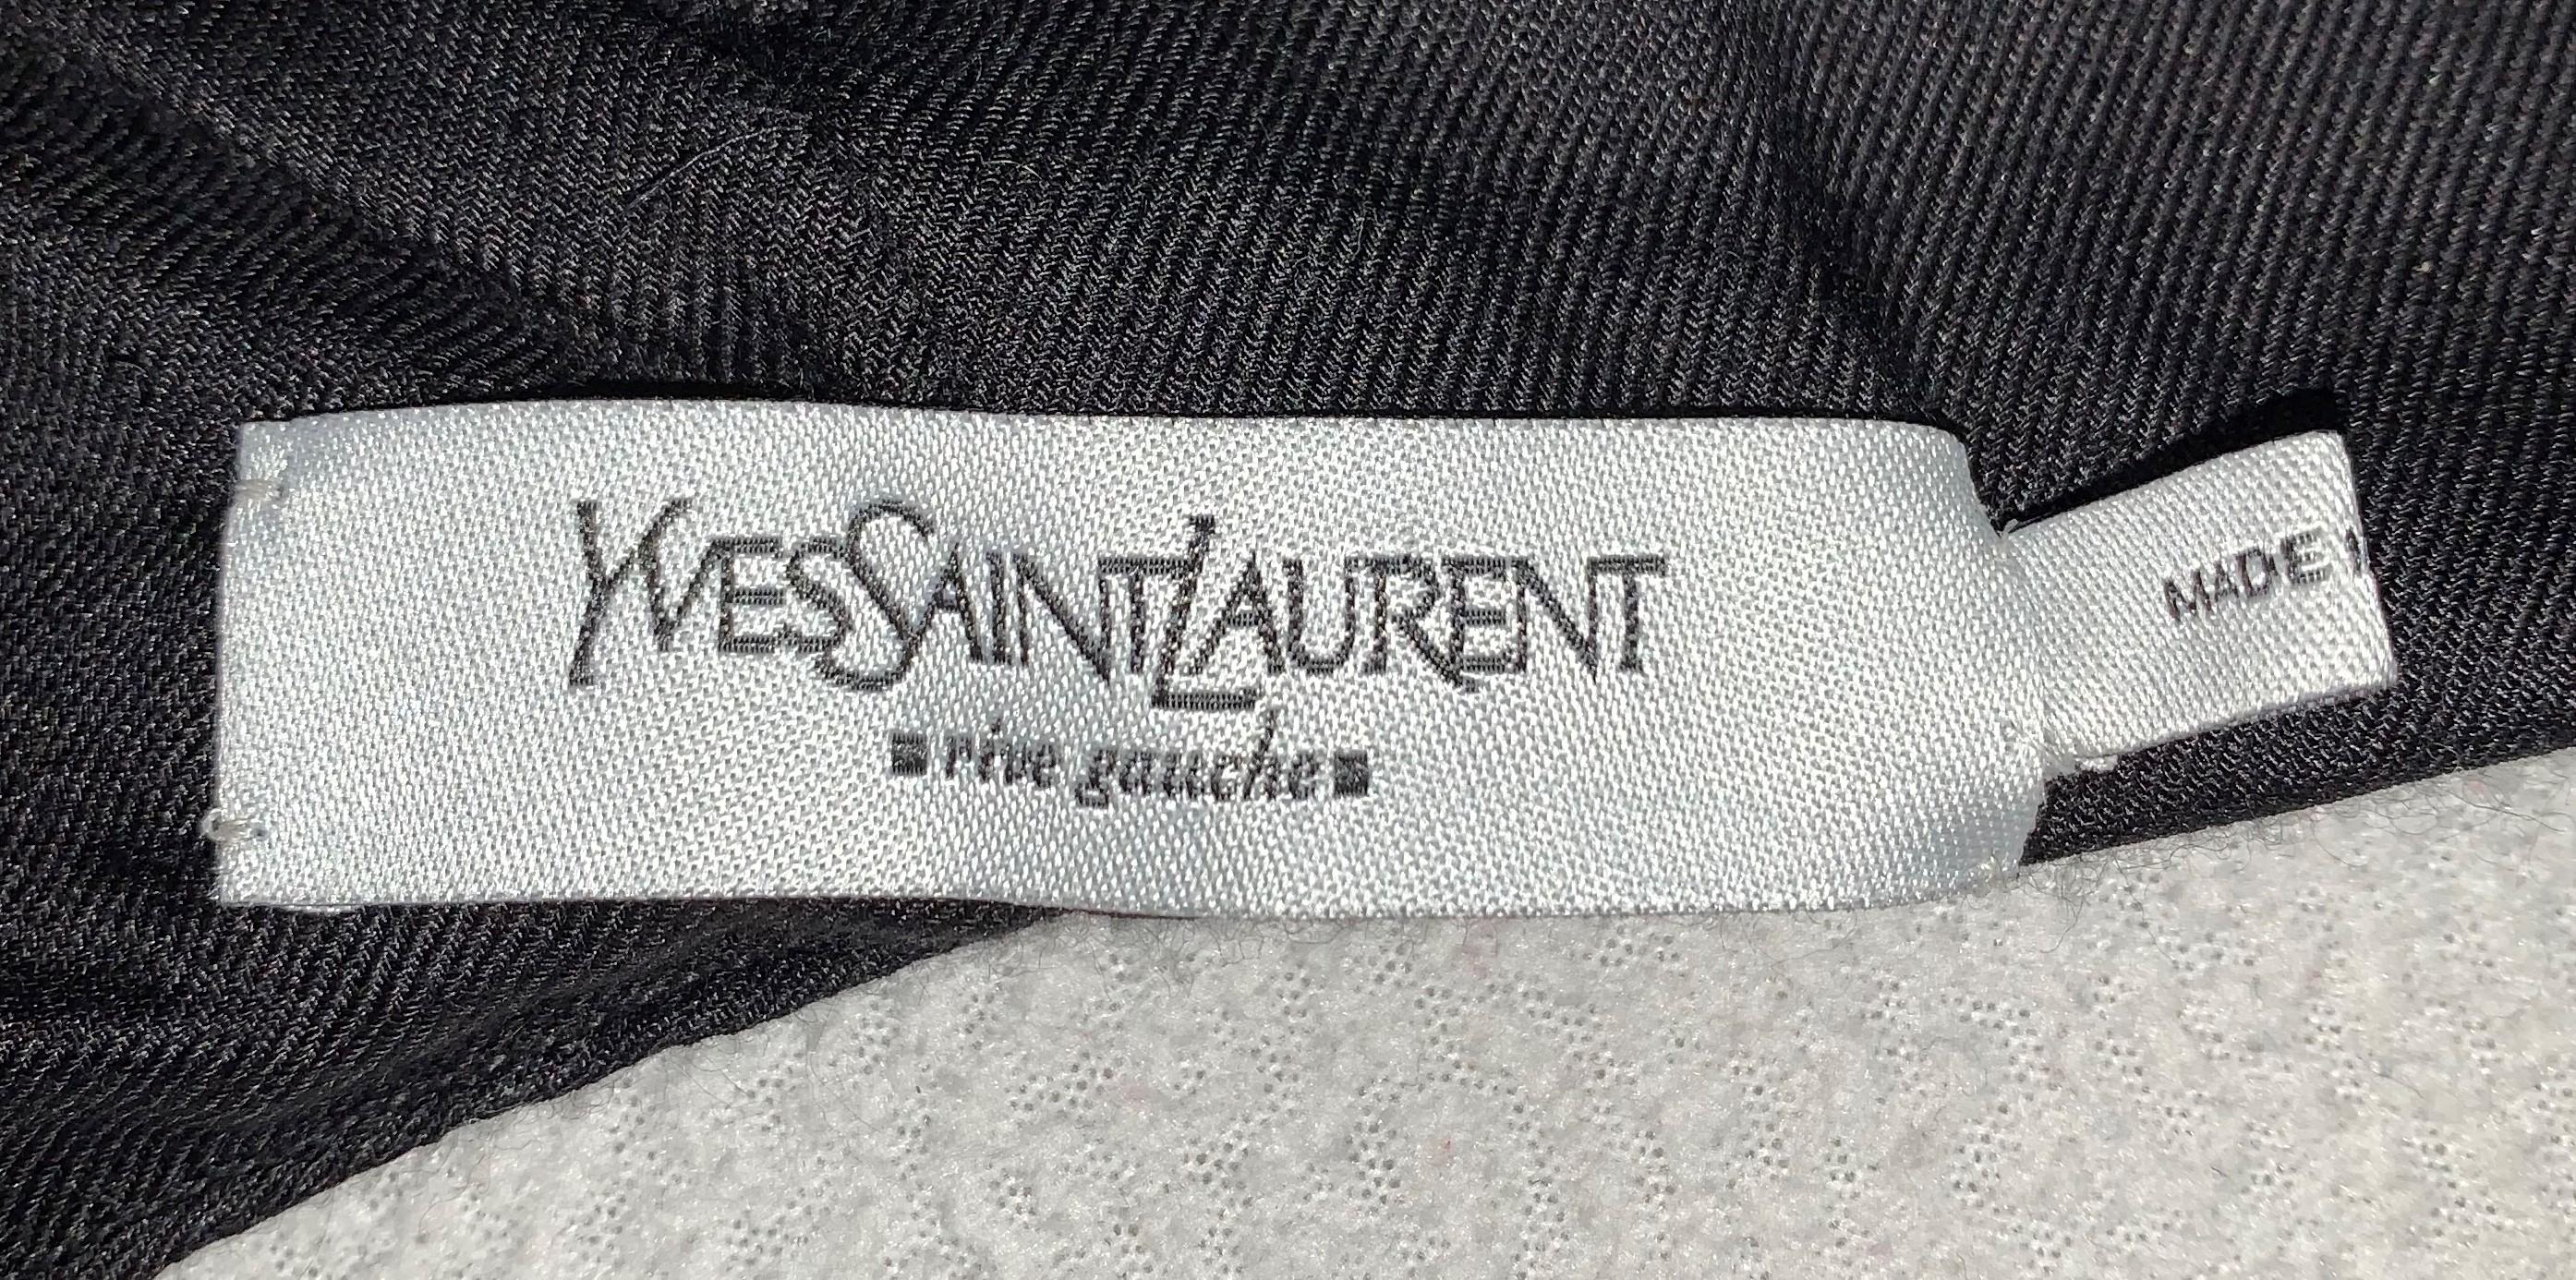 Women's S/S 2003 Yves Saint Laurent Tom Ford Vintage Style Black Leather Flight Cap Hat